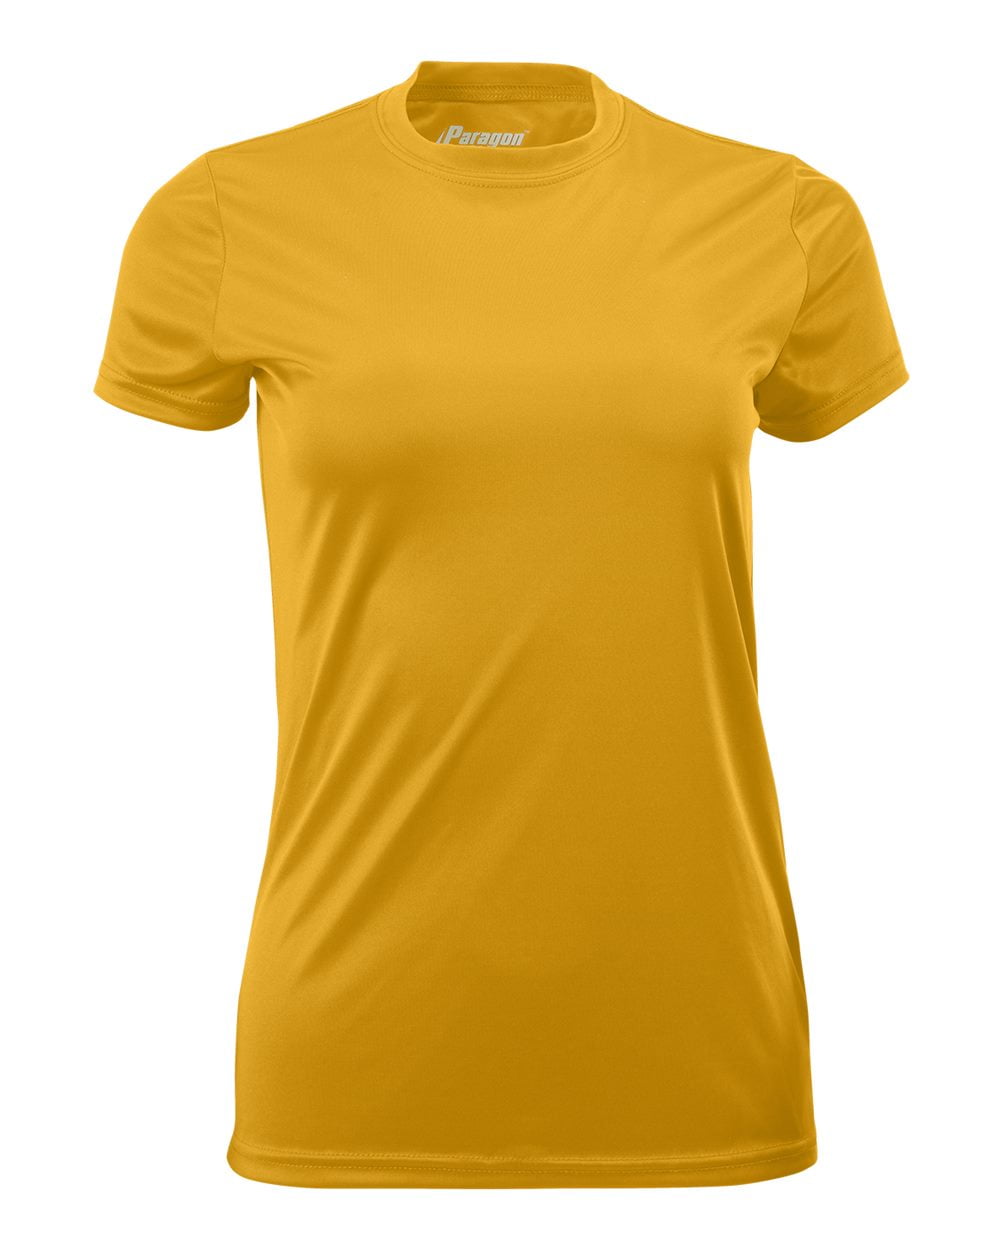 Paragon Women's Islander Performance T-Shirt, Gold - XL 